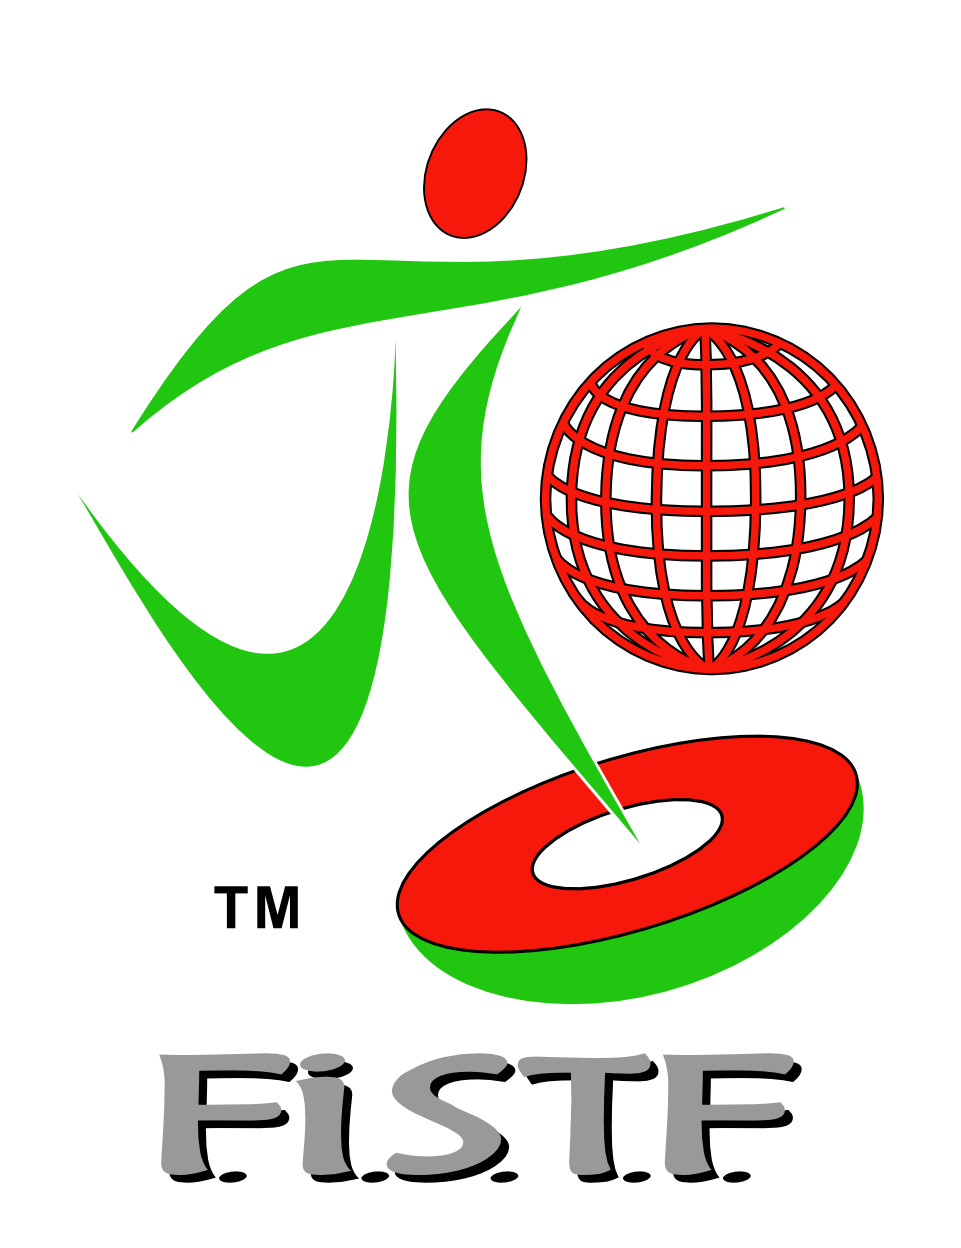 (c) Fistf.com